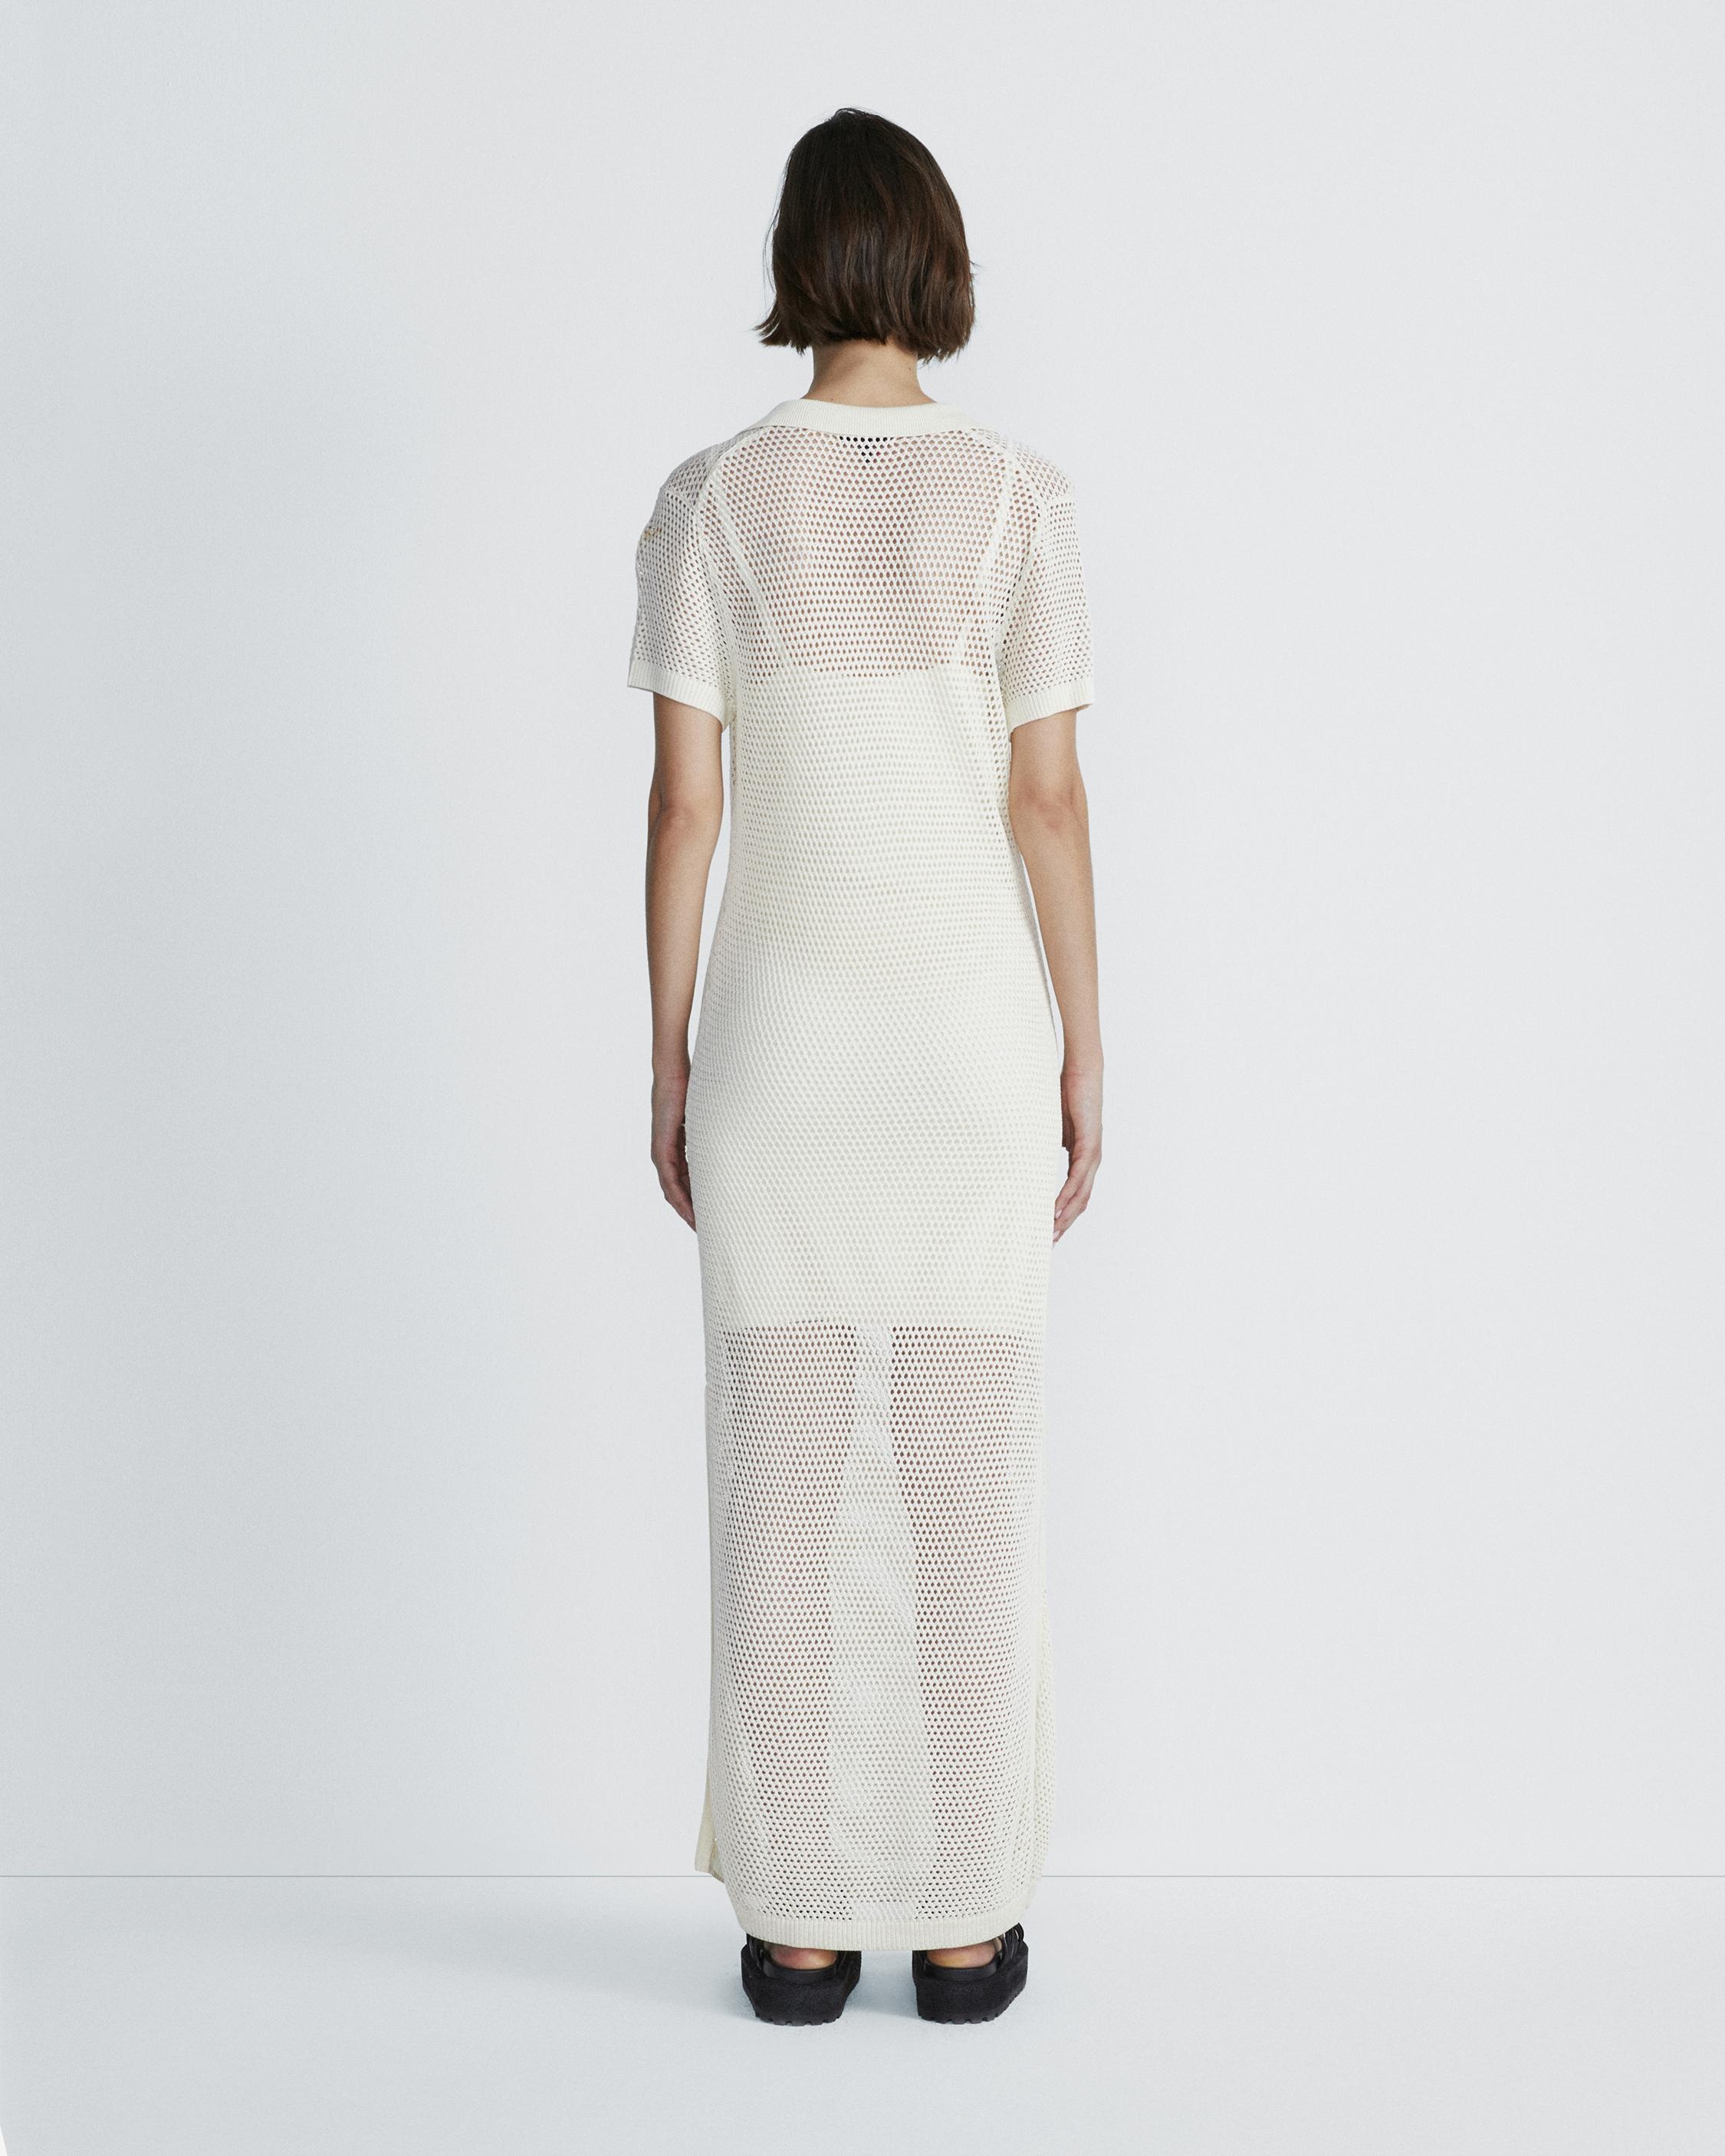 Leah Polo Viscose Dress
Maxi Dress - 4